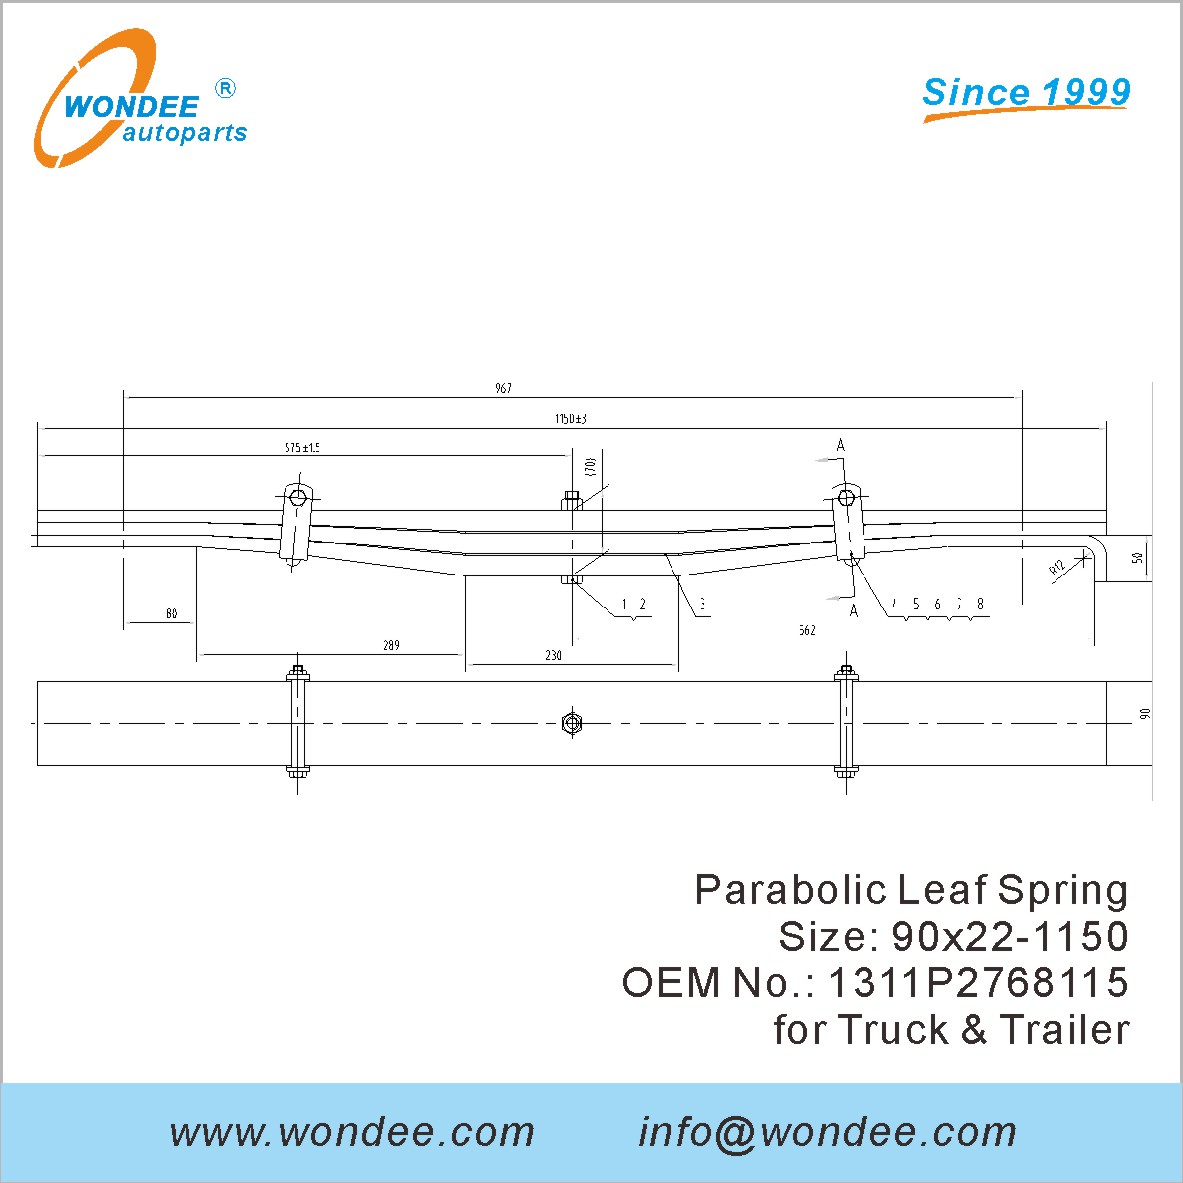 WONDEE light duty parabolic Leaf Spring OEM 1311P2768115 for Truck & Trailer